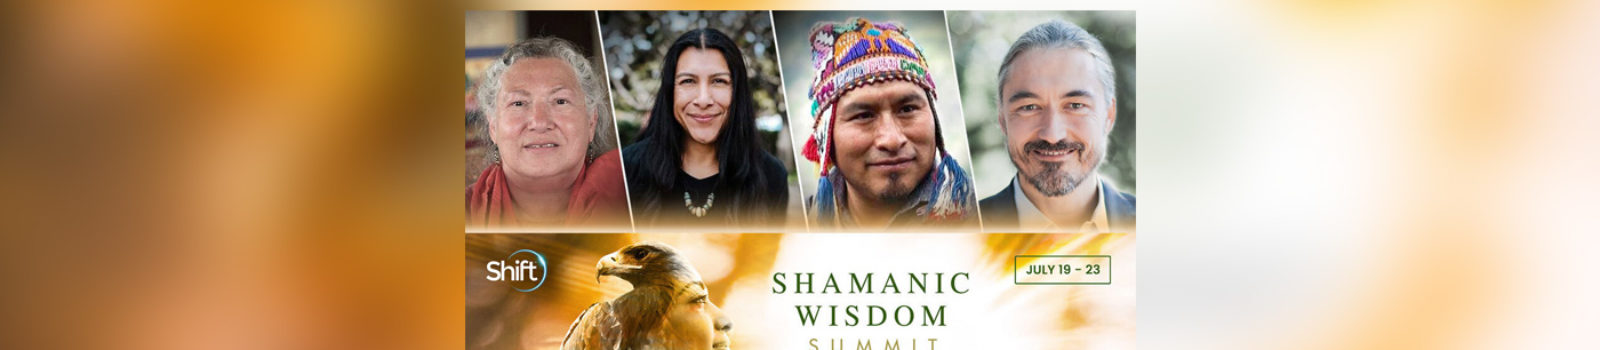 shamanic wisdom summiitt